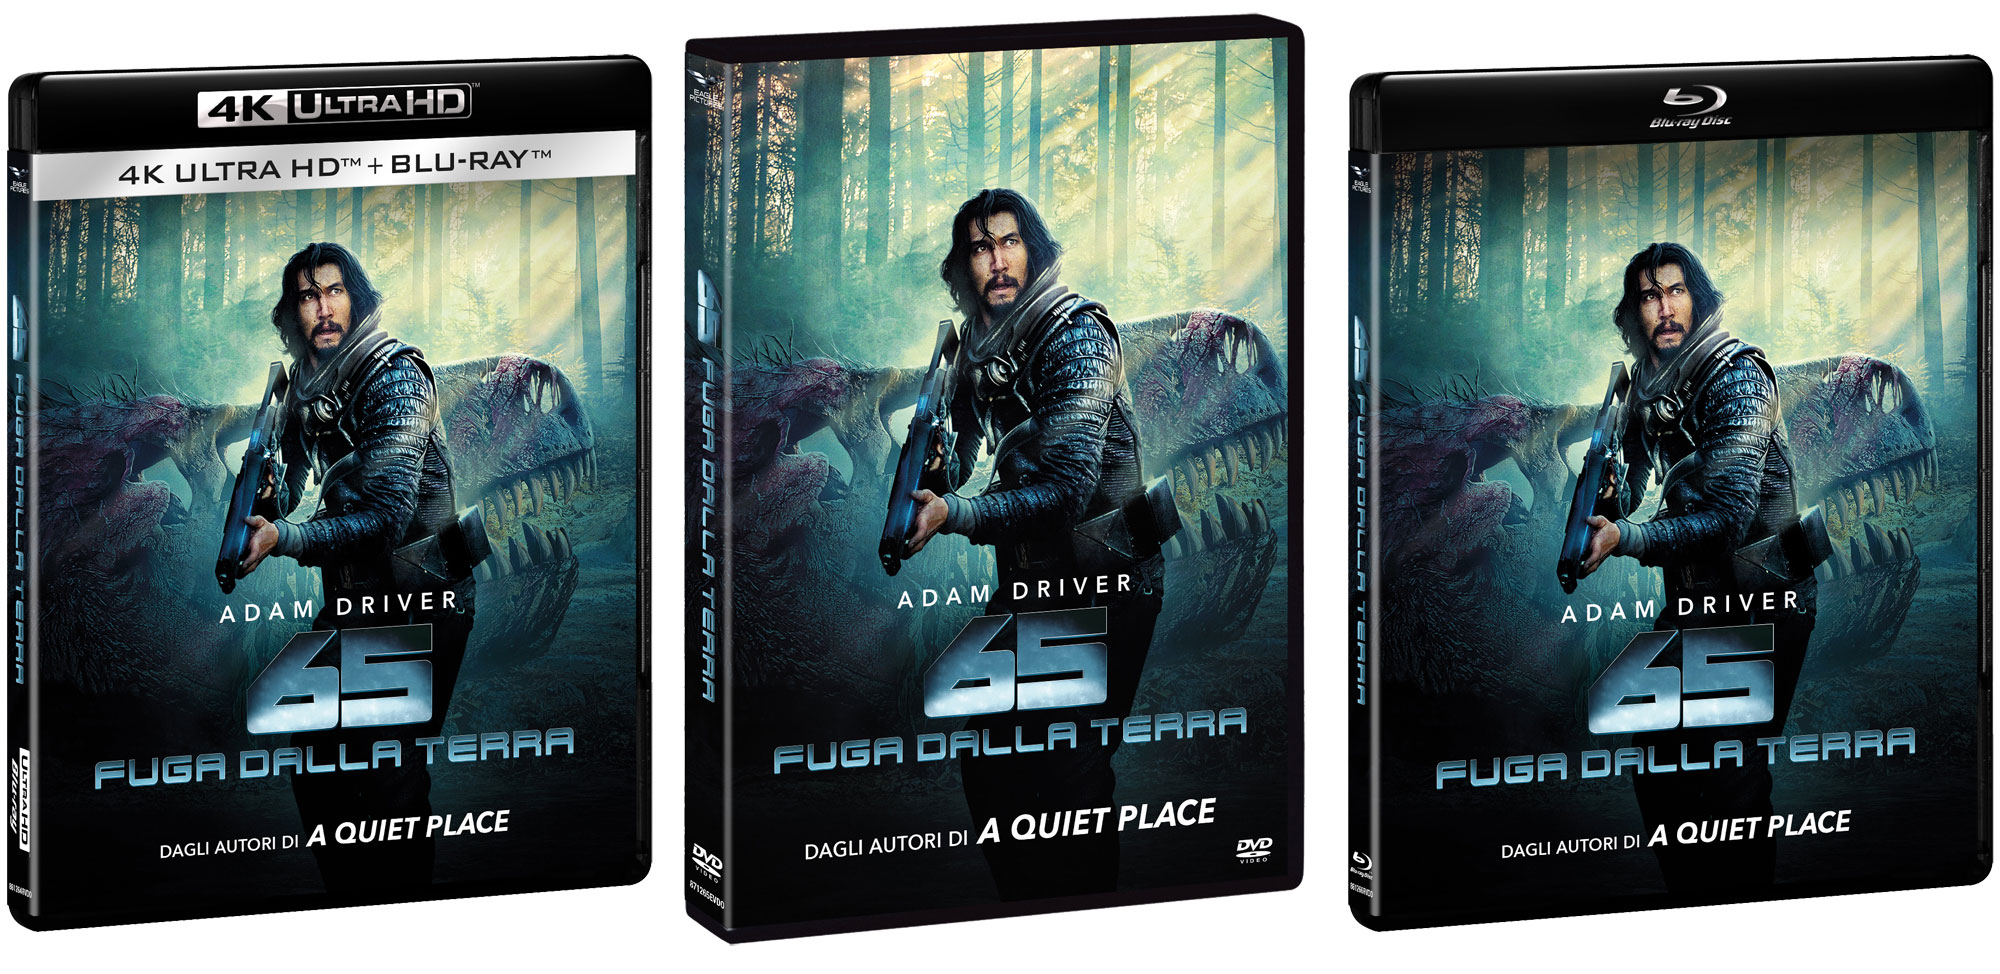 65 Fuga dalla Terra in DVD, Blu-ray e 4K Ultra HD